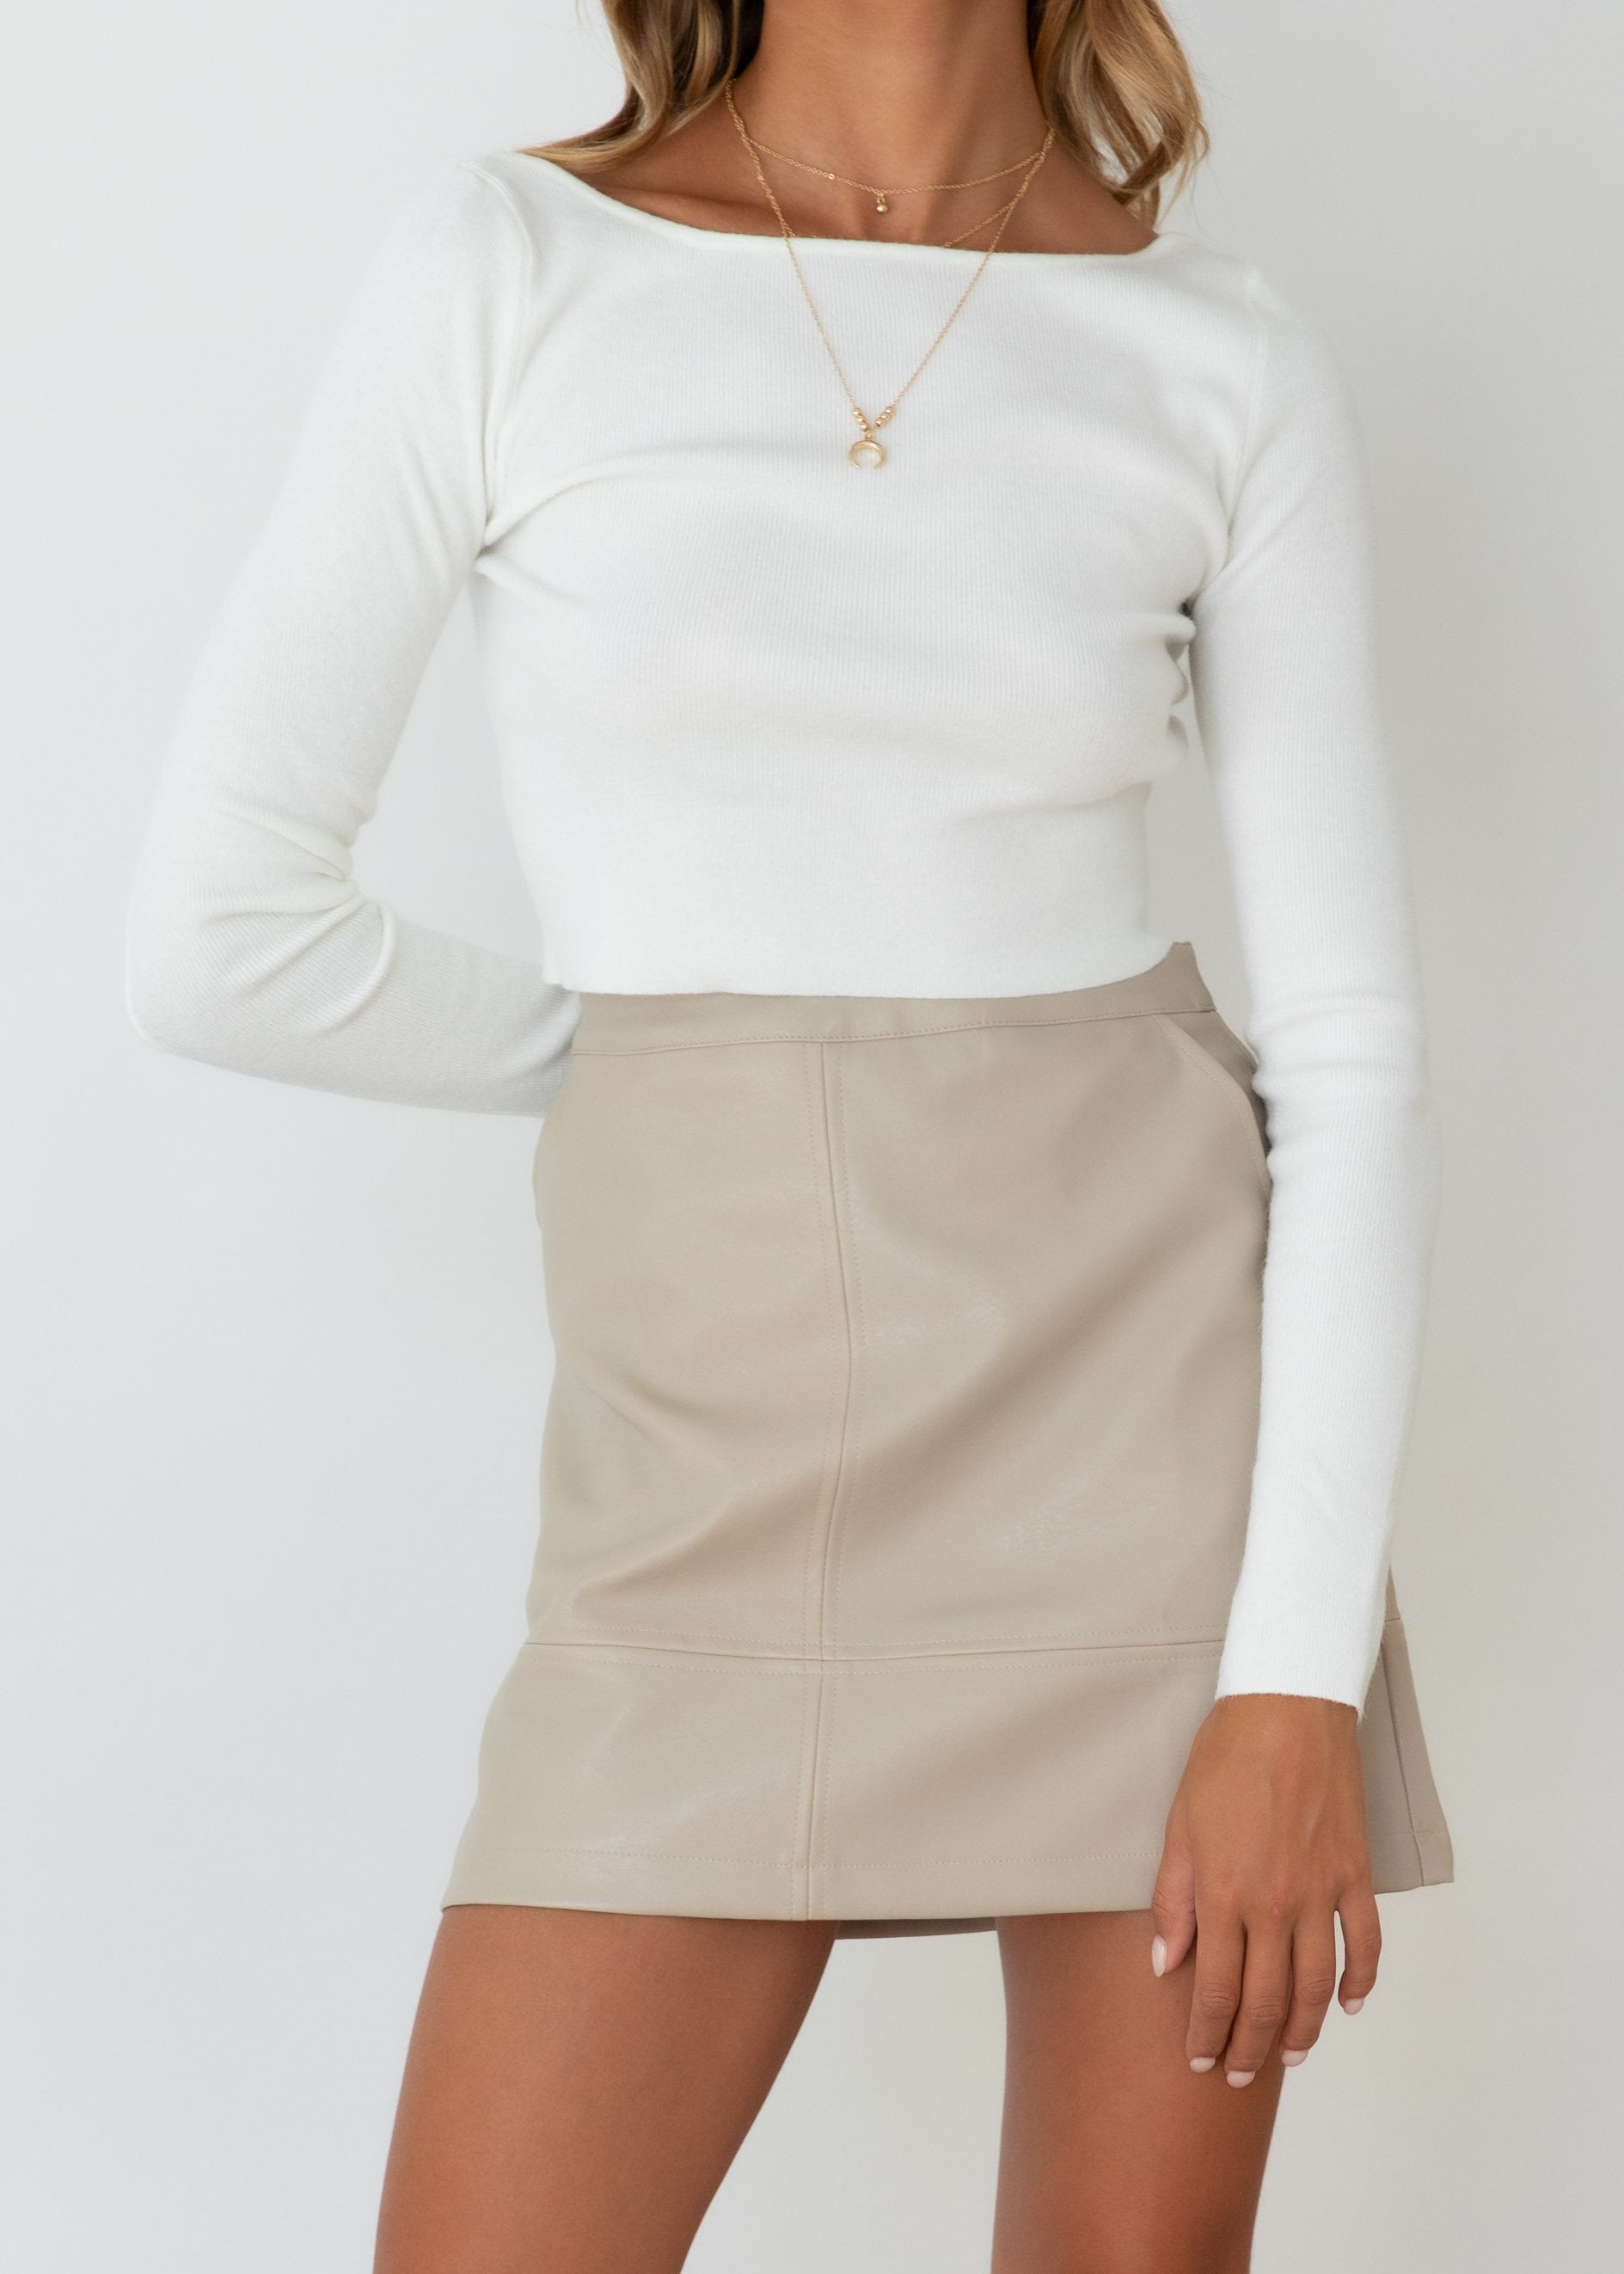 Larina Knit Top - Off White